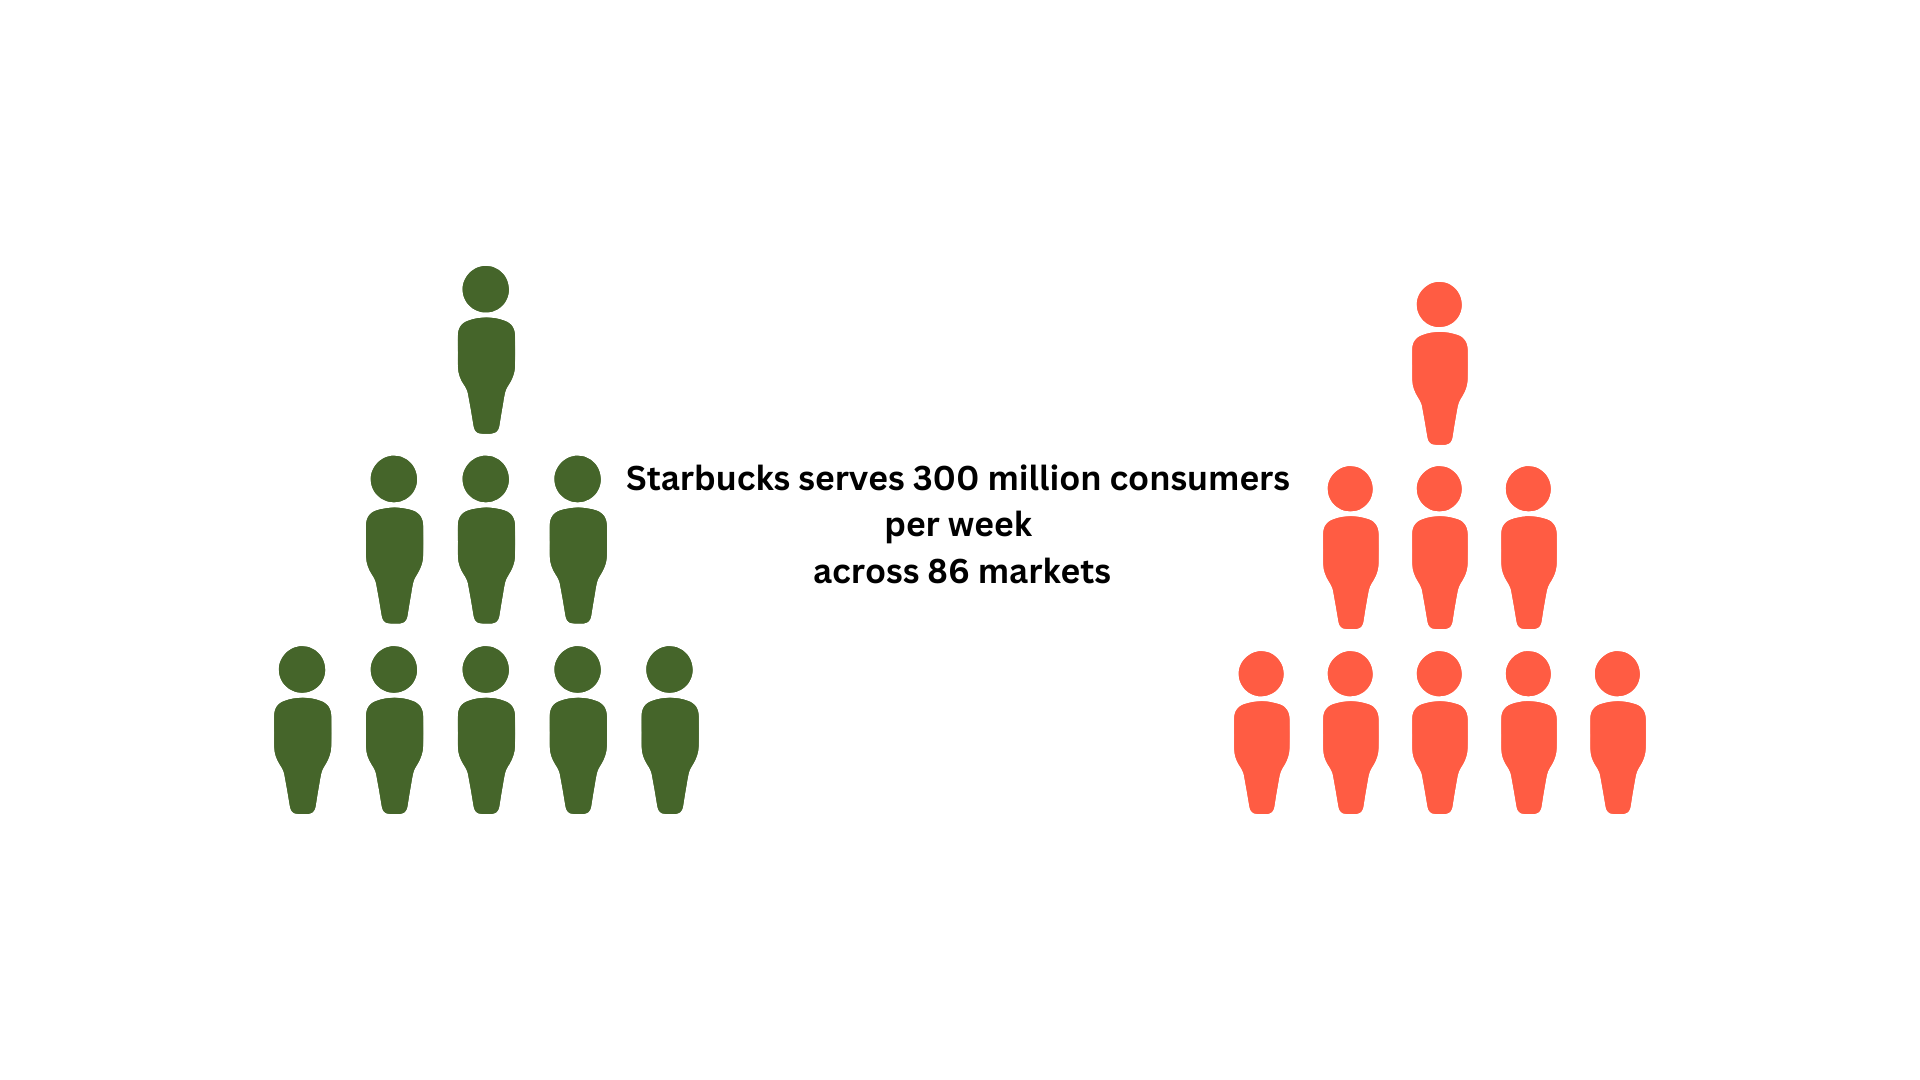 Starbucks statistics